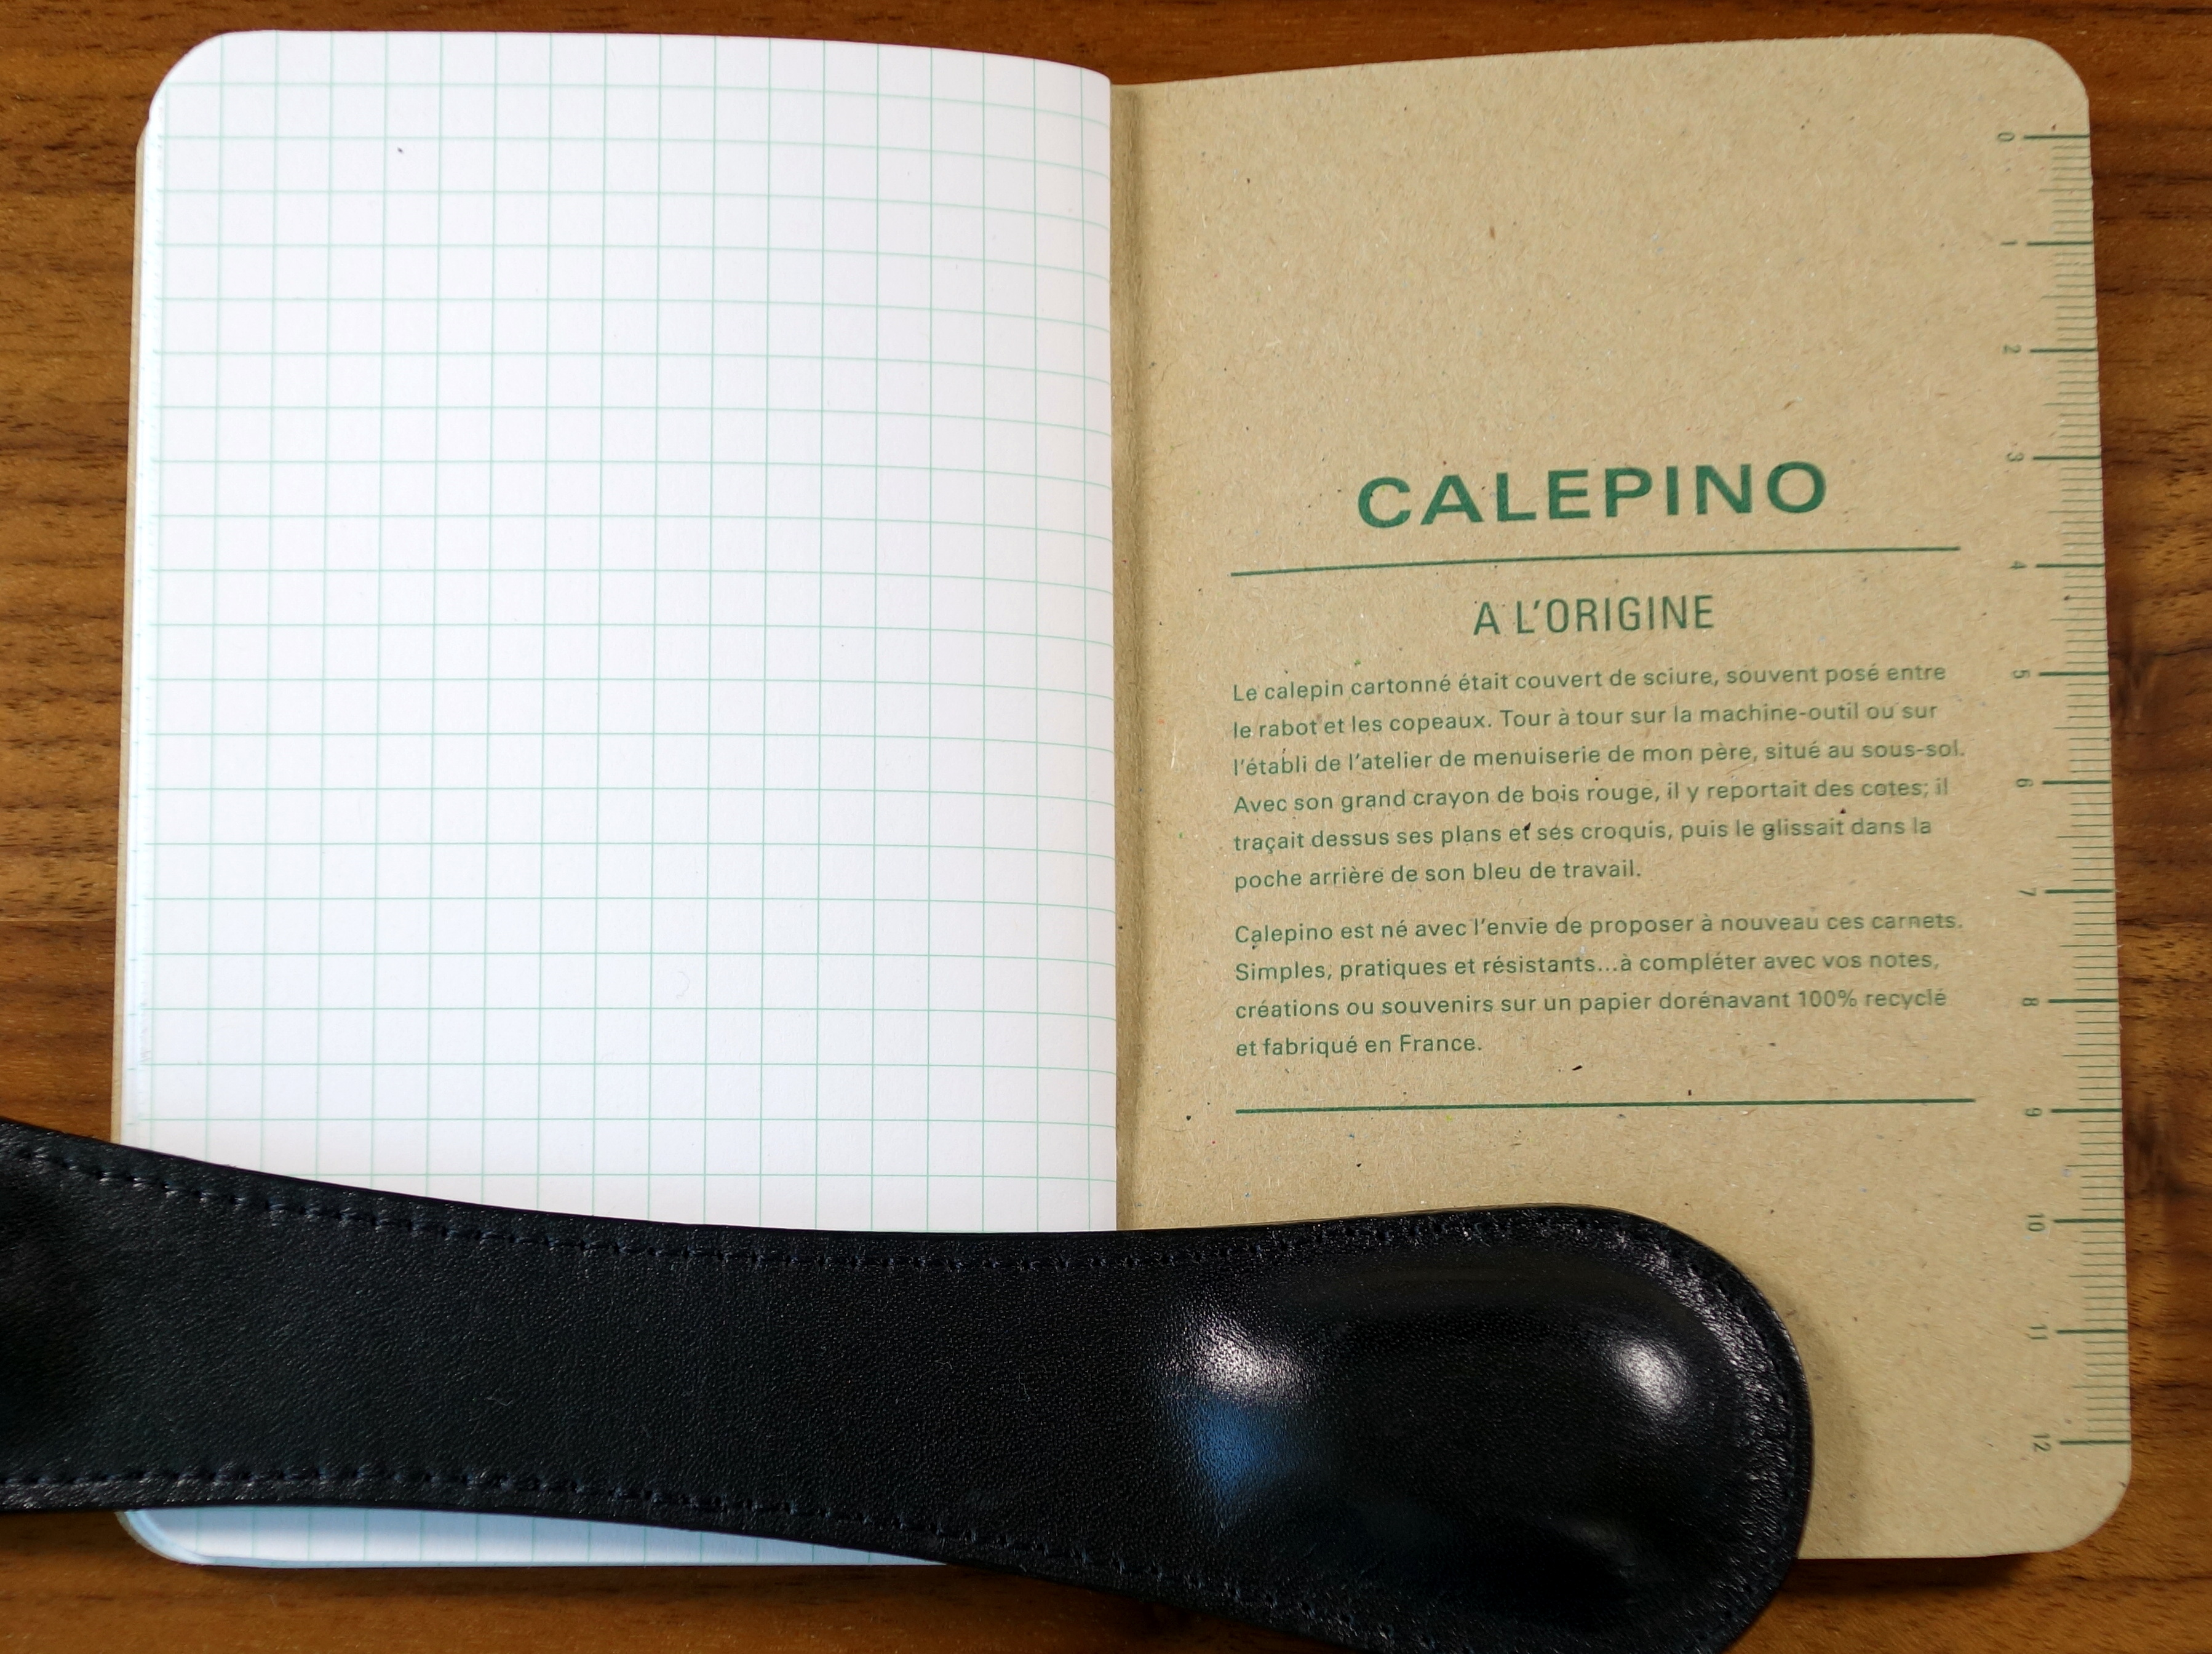 Calepino No 2 Pocket Notebook